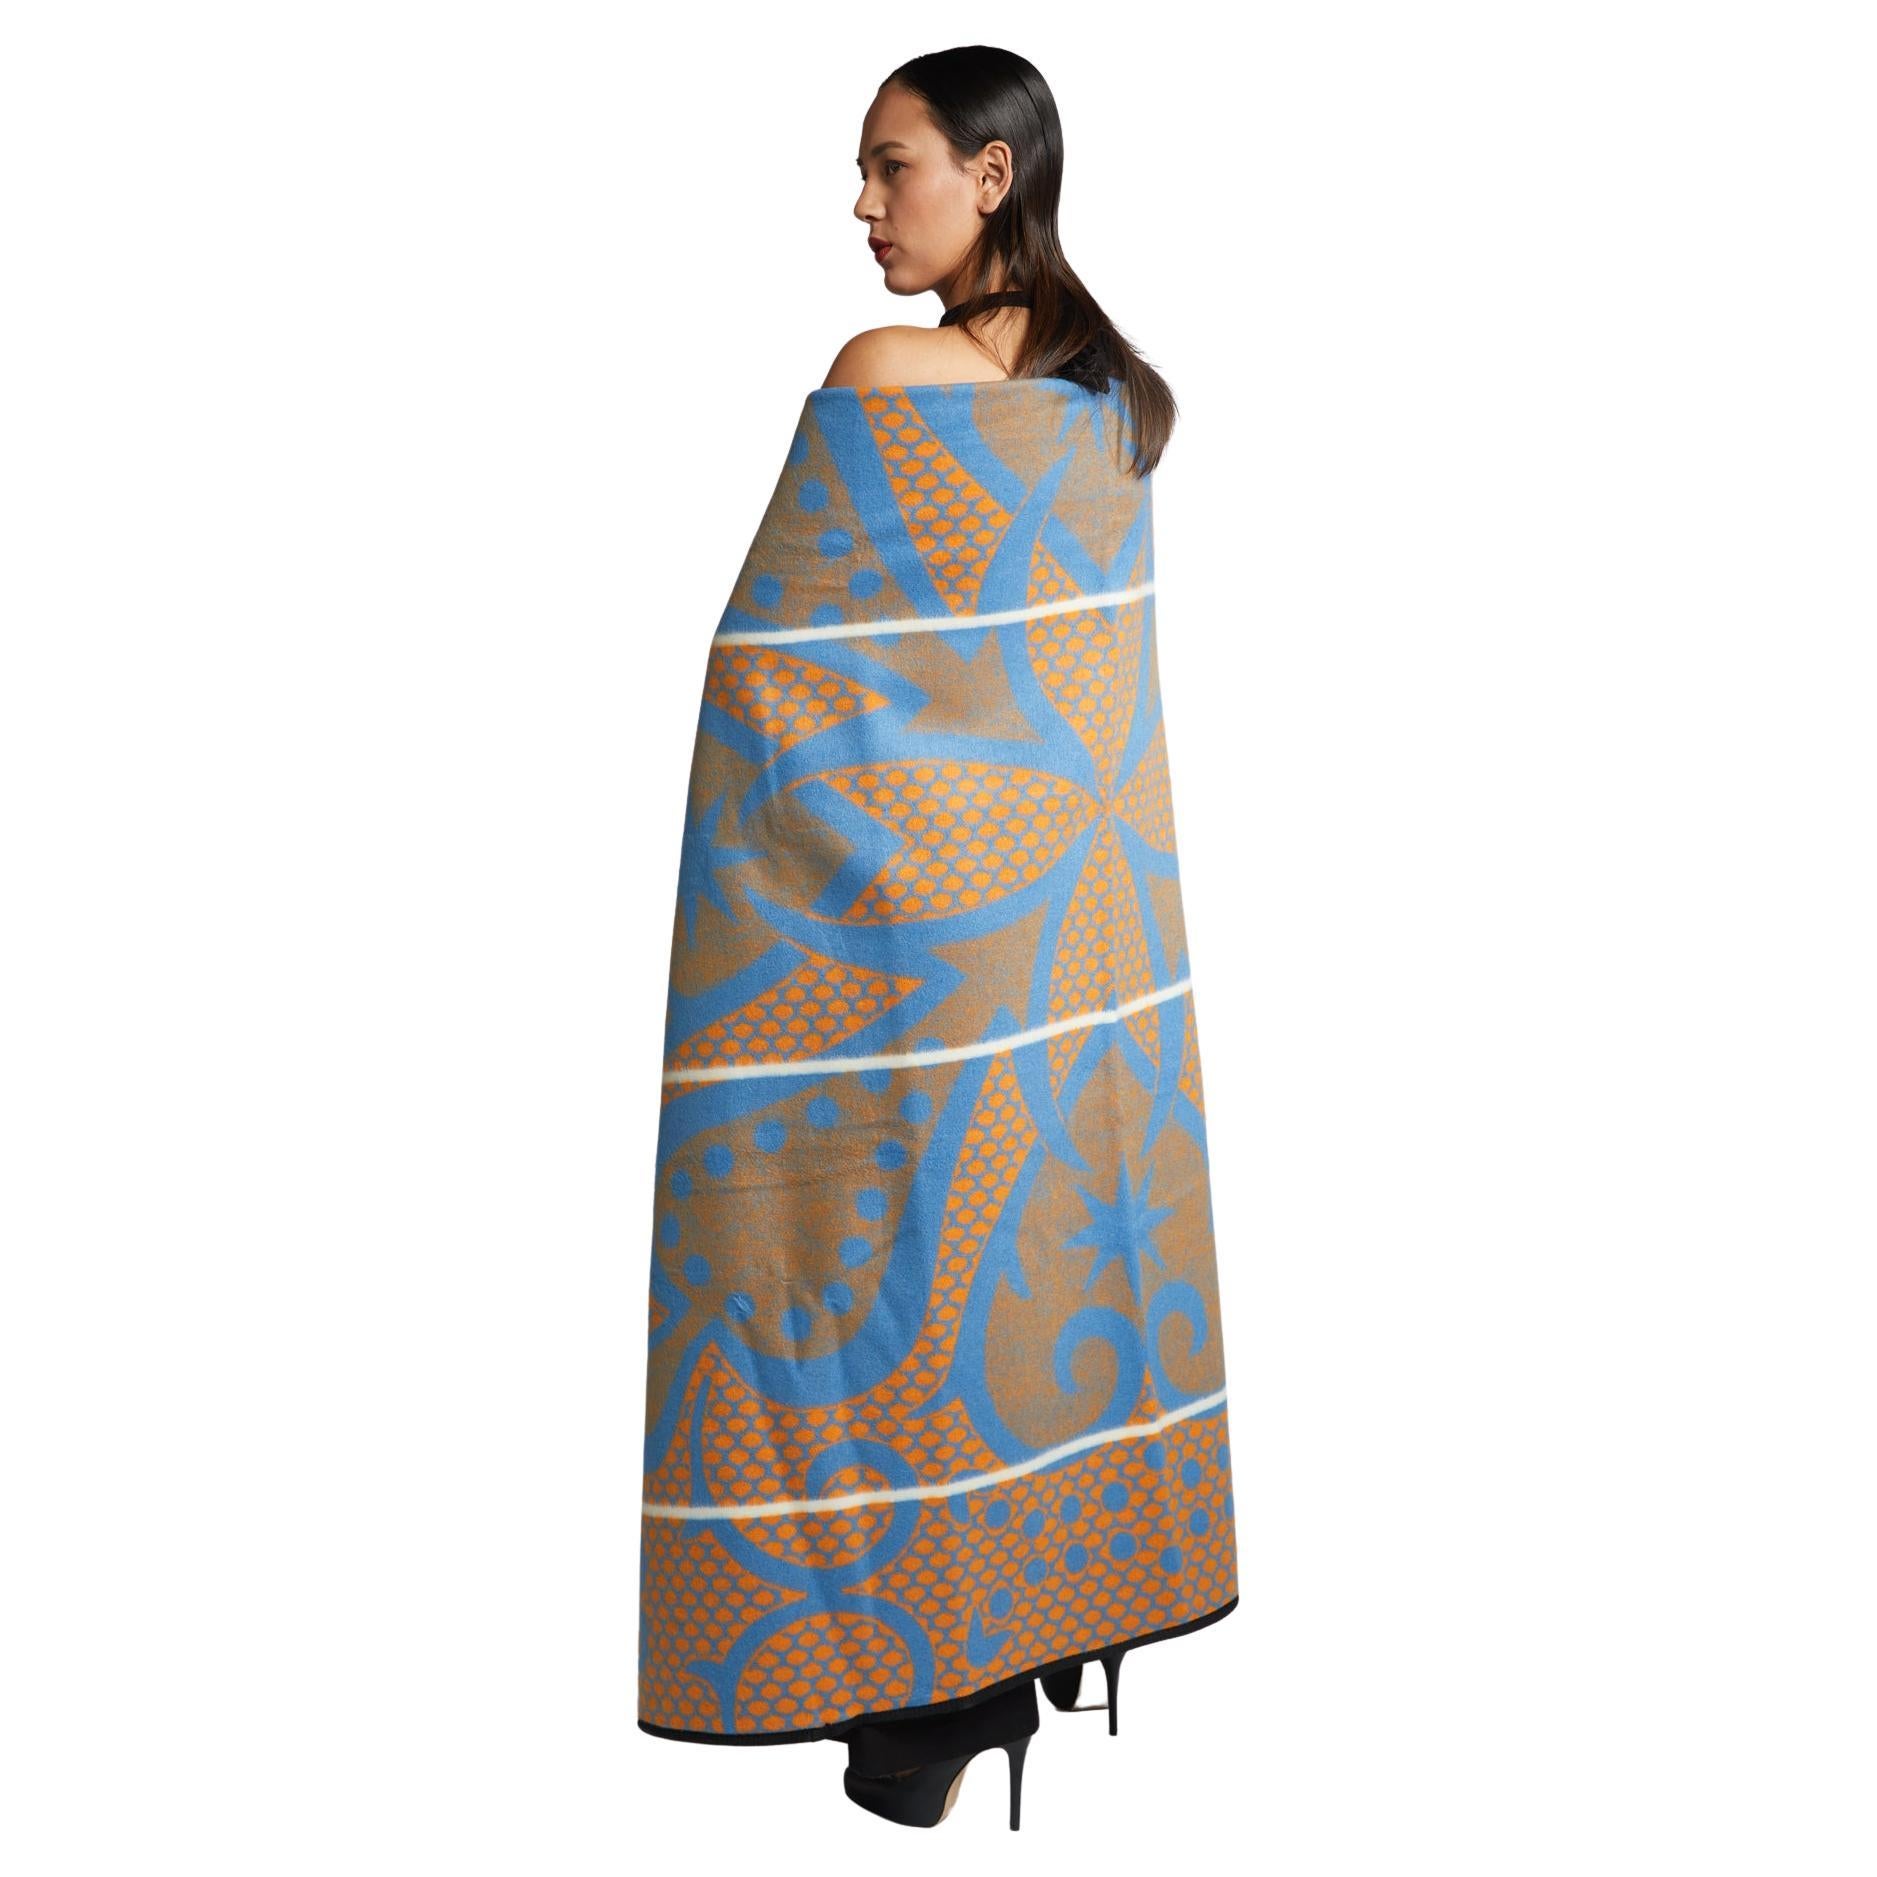 Basotho Heritage Blanket Scarf - Azure Spade